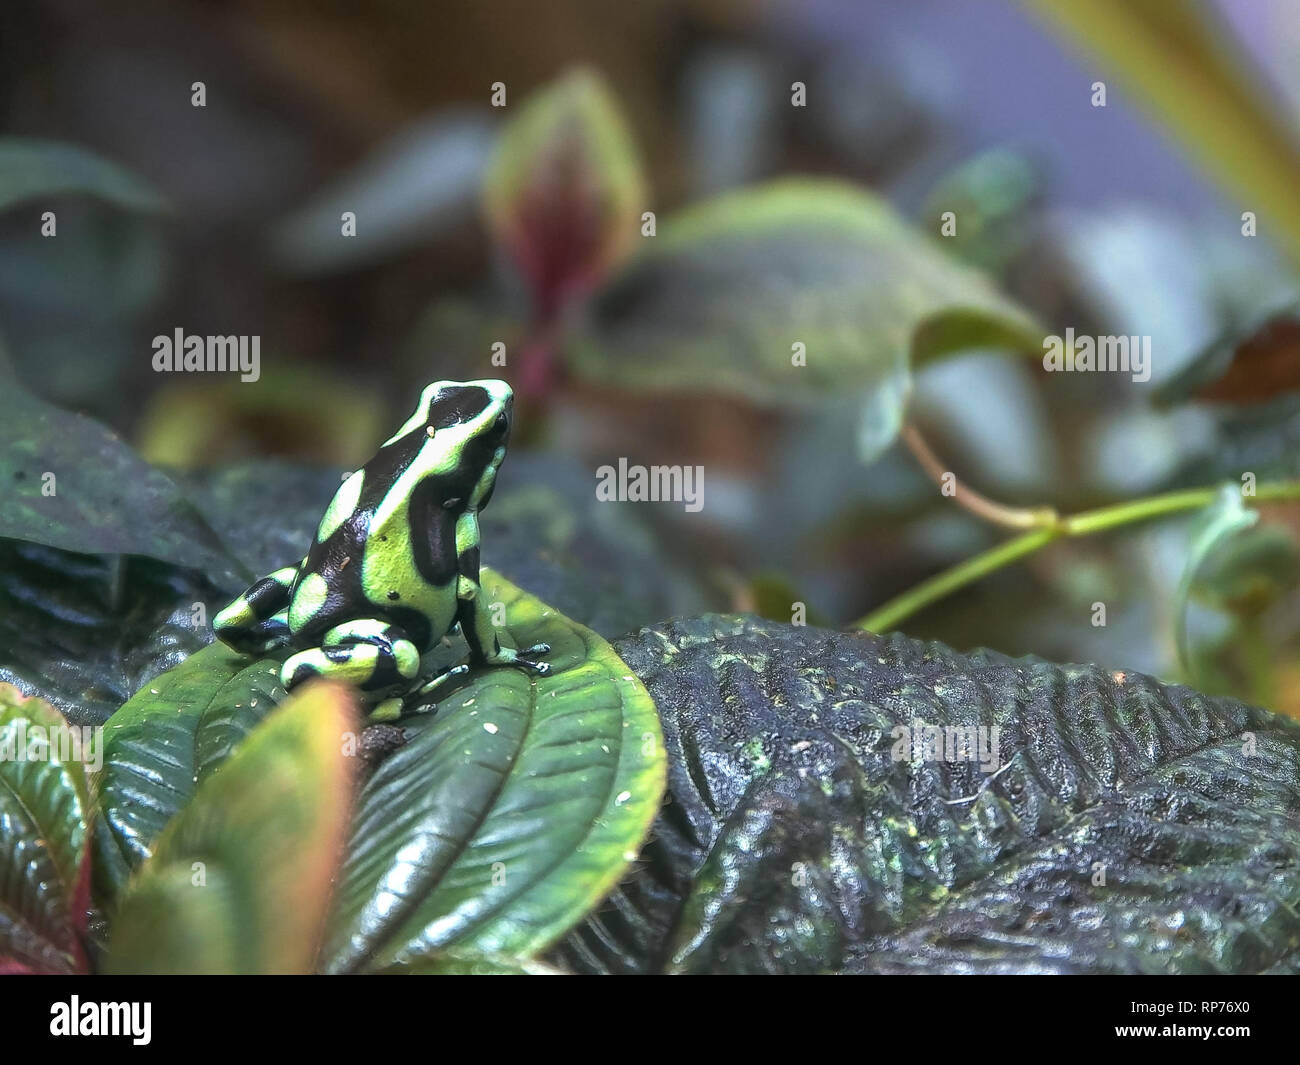 Green and black poison dart frog sitting on a leaf Banque D'Images